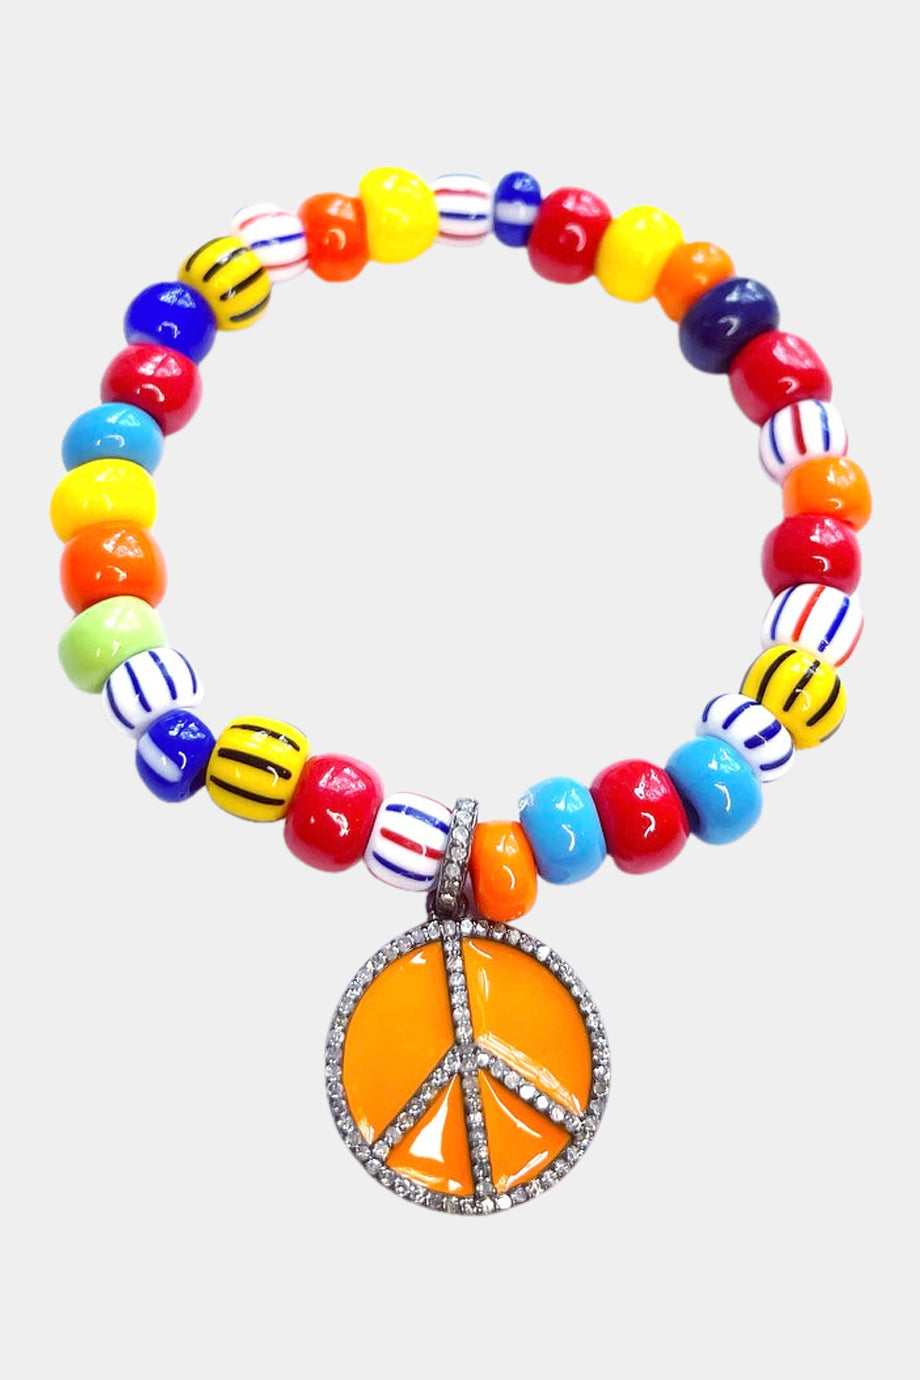 Colourful Stretch Bracelet with an Orange Enamel Peace Charm